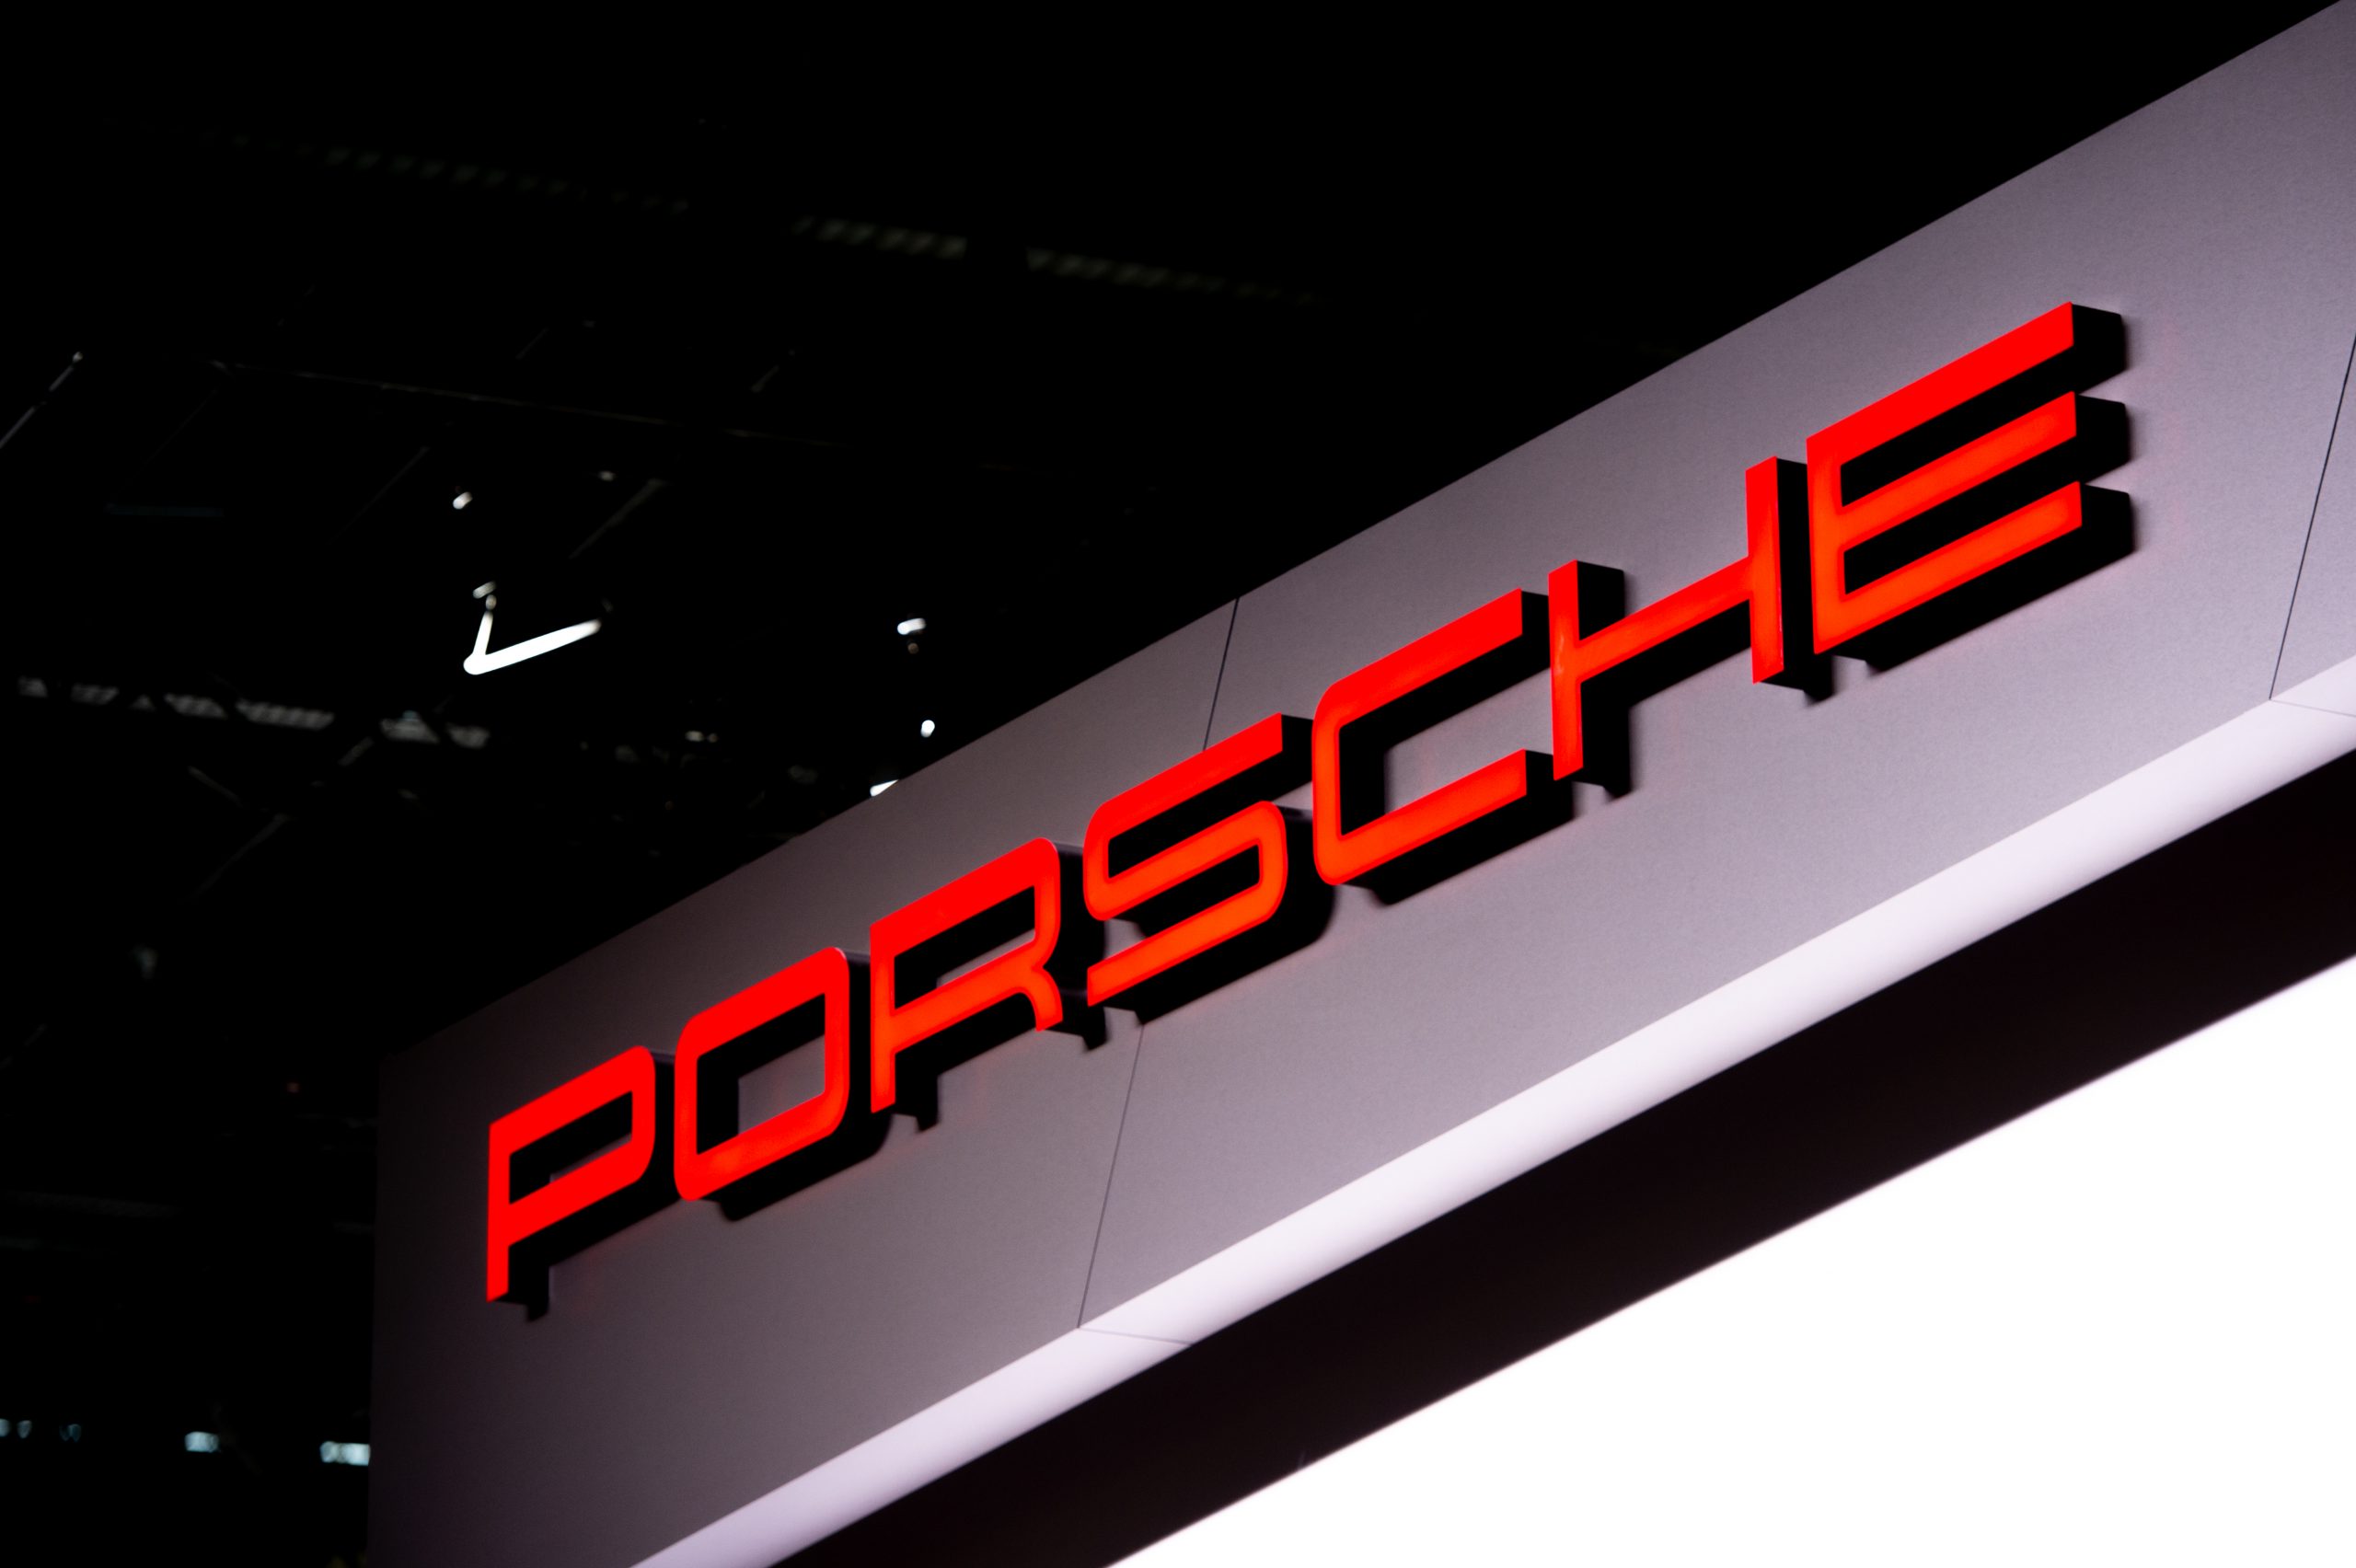 Red Porsche logo on a gray background